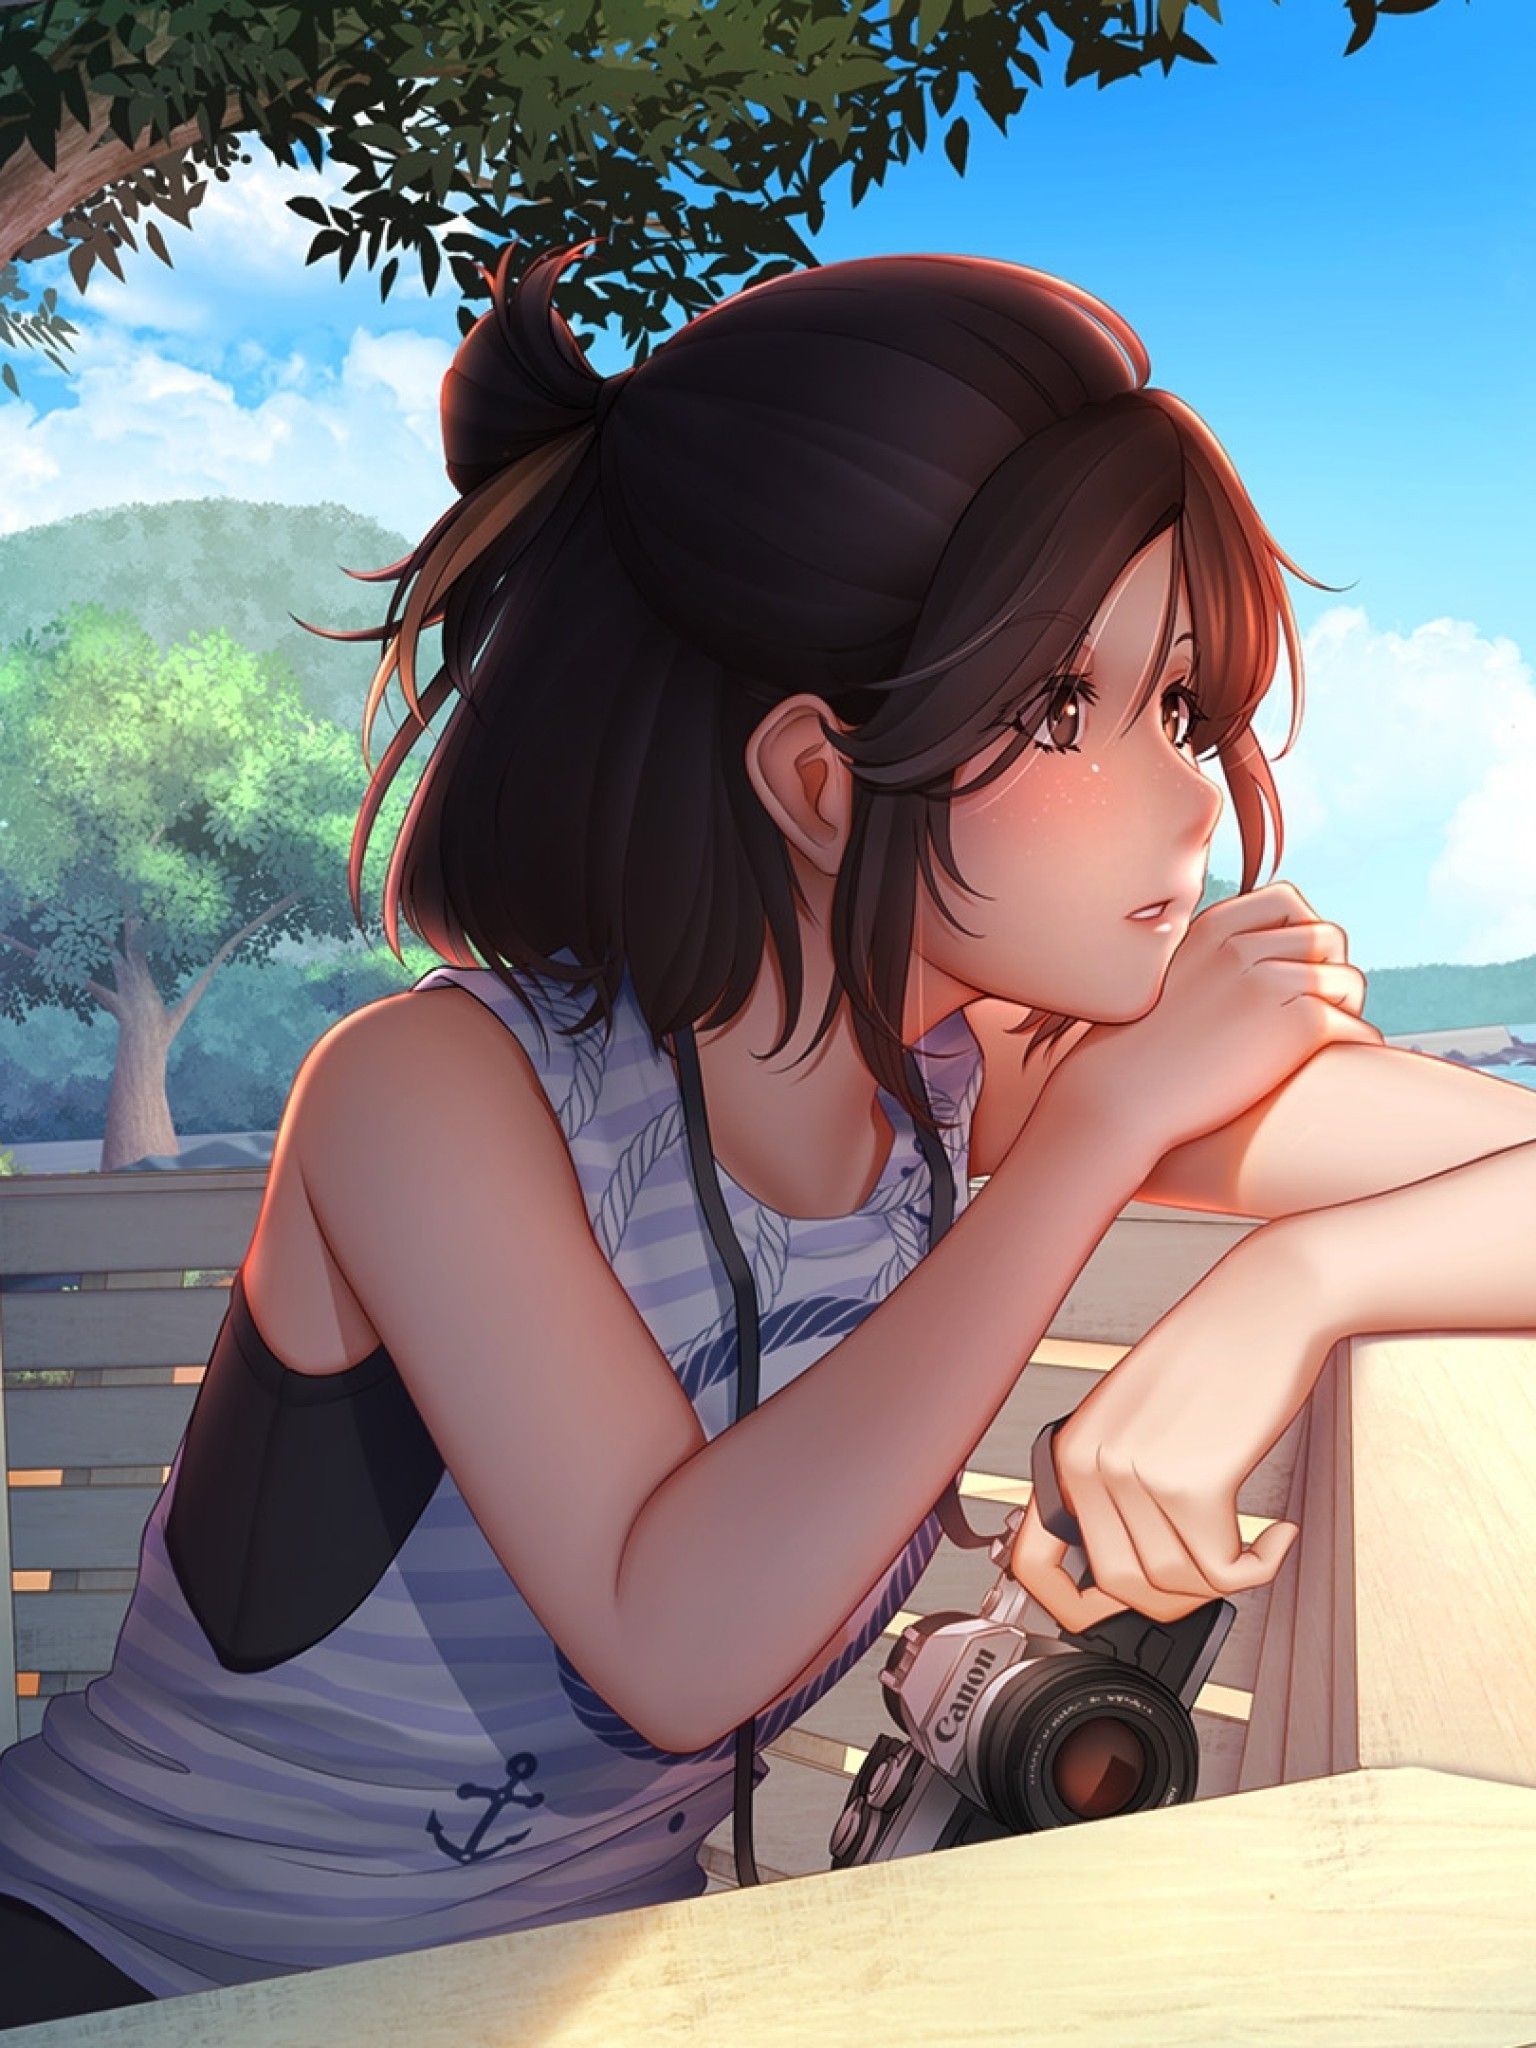 Download 1536x2048 Anime Girl, Summer, Cannon, Looking Away, Semi Realistic, Beach, Sky, Profile View Wallpaper for Apple iPad Mini, Apple IPad 4